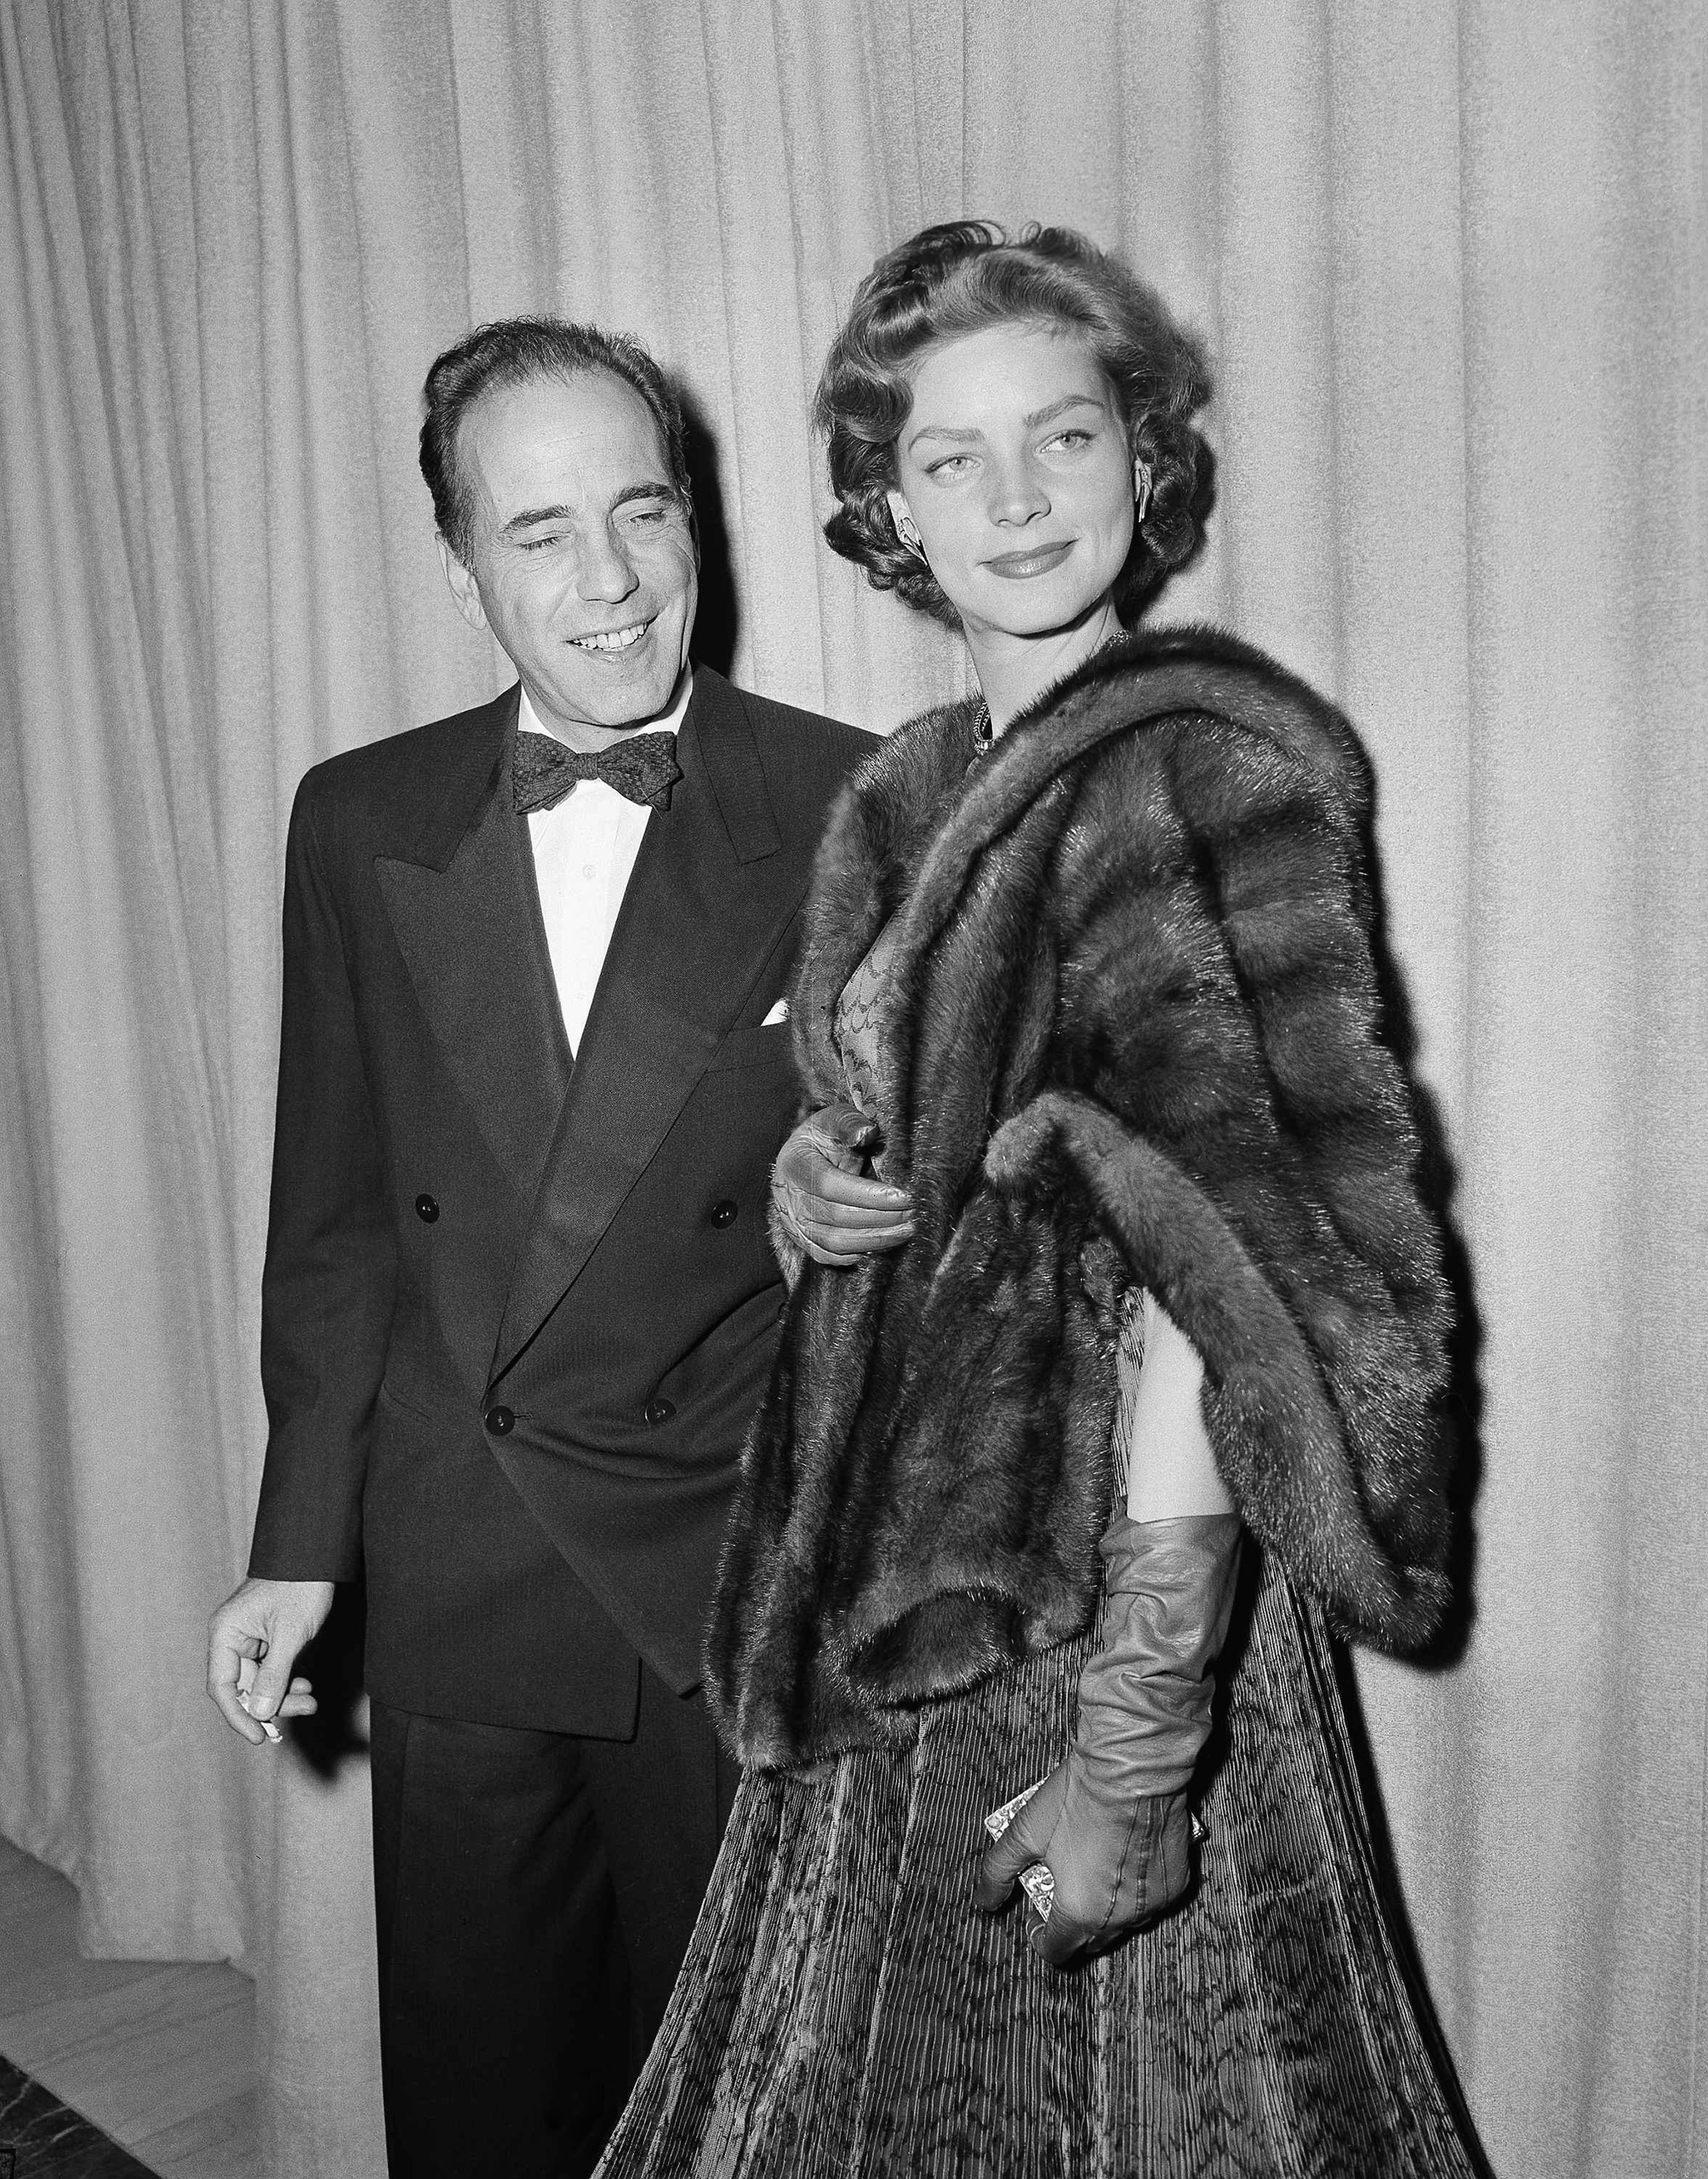 Humphrey Bogart and Lauren Bacall at the Academy Awards, 1952.